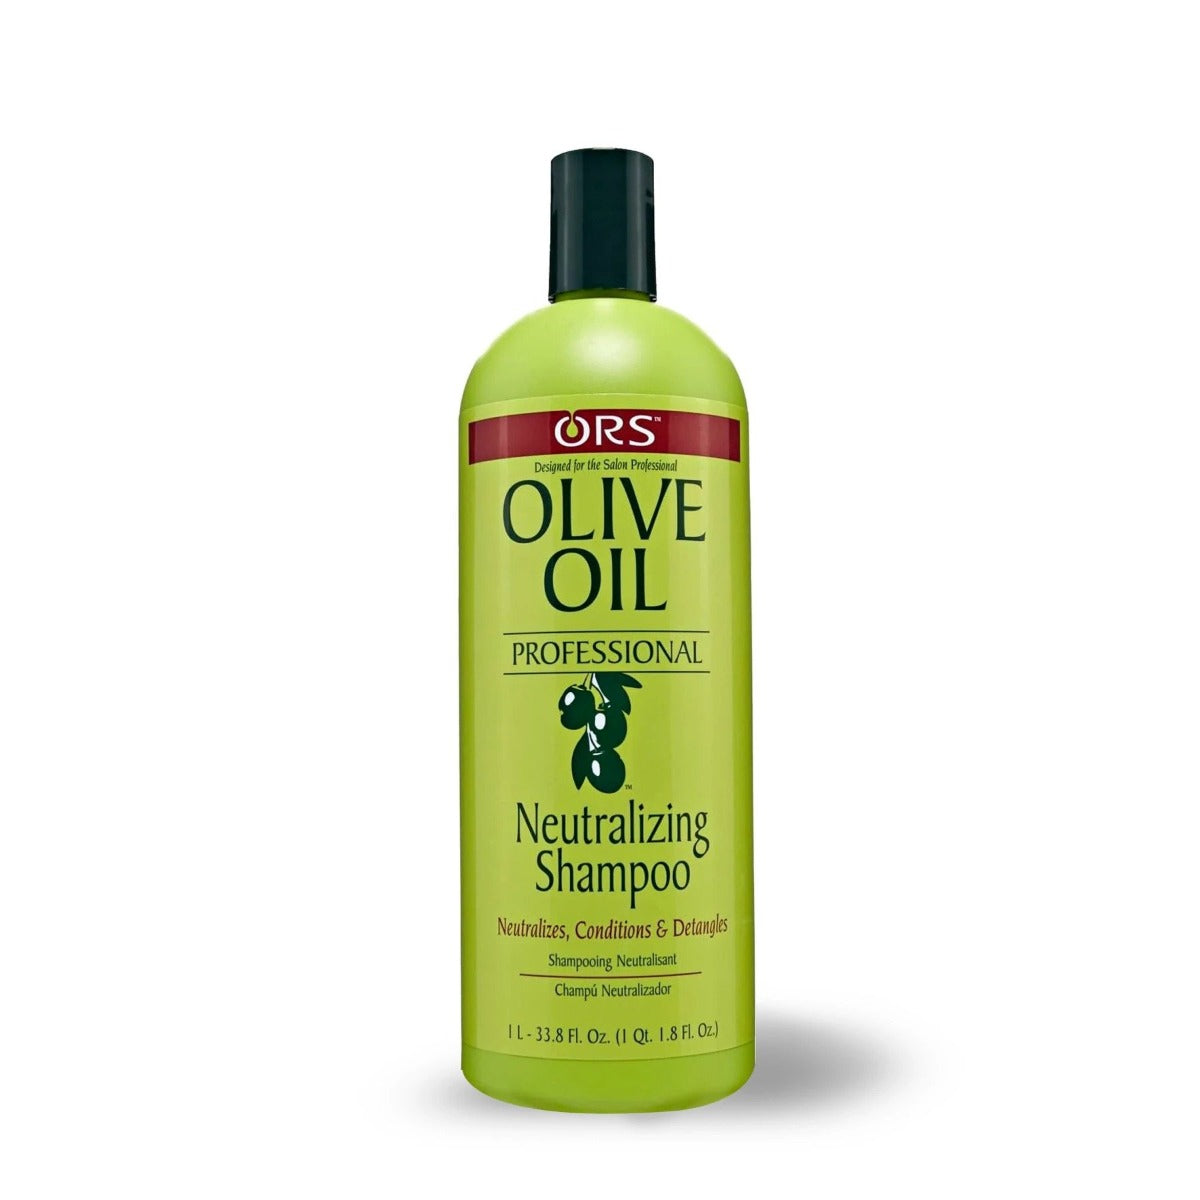 ORS Olive Oil Professional Neutralizing Shampoo 1L